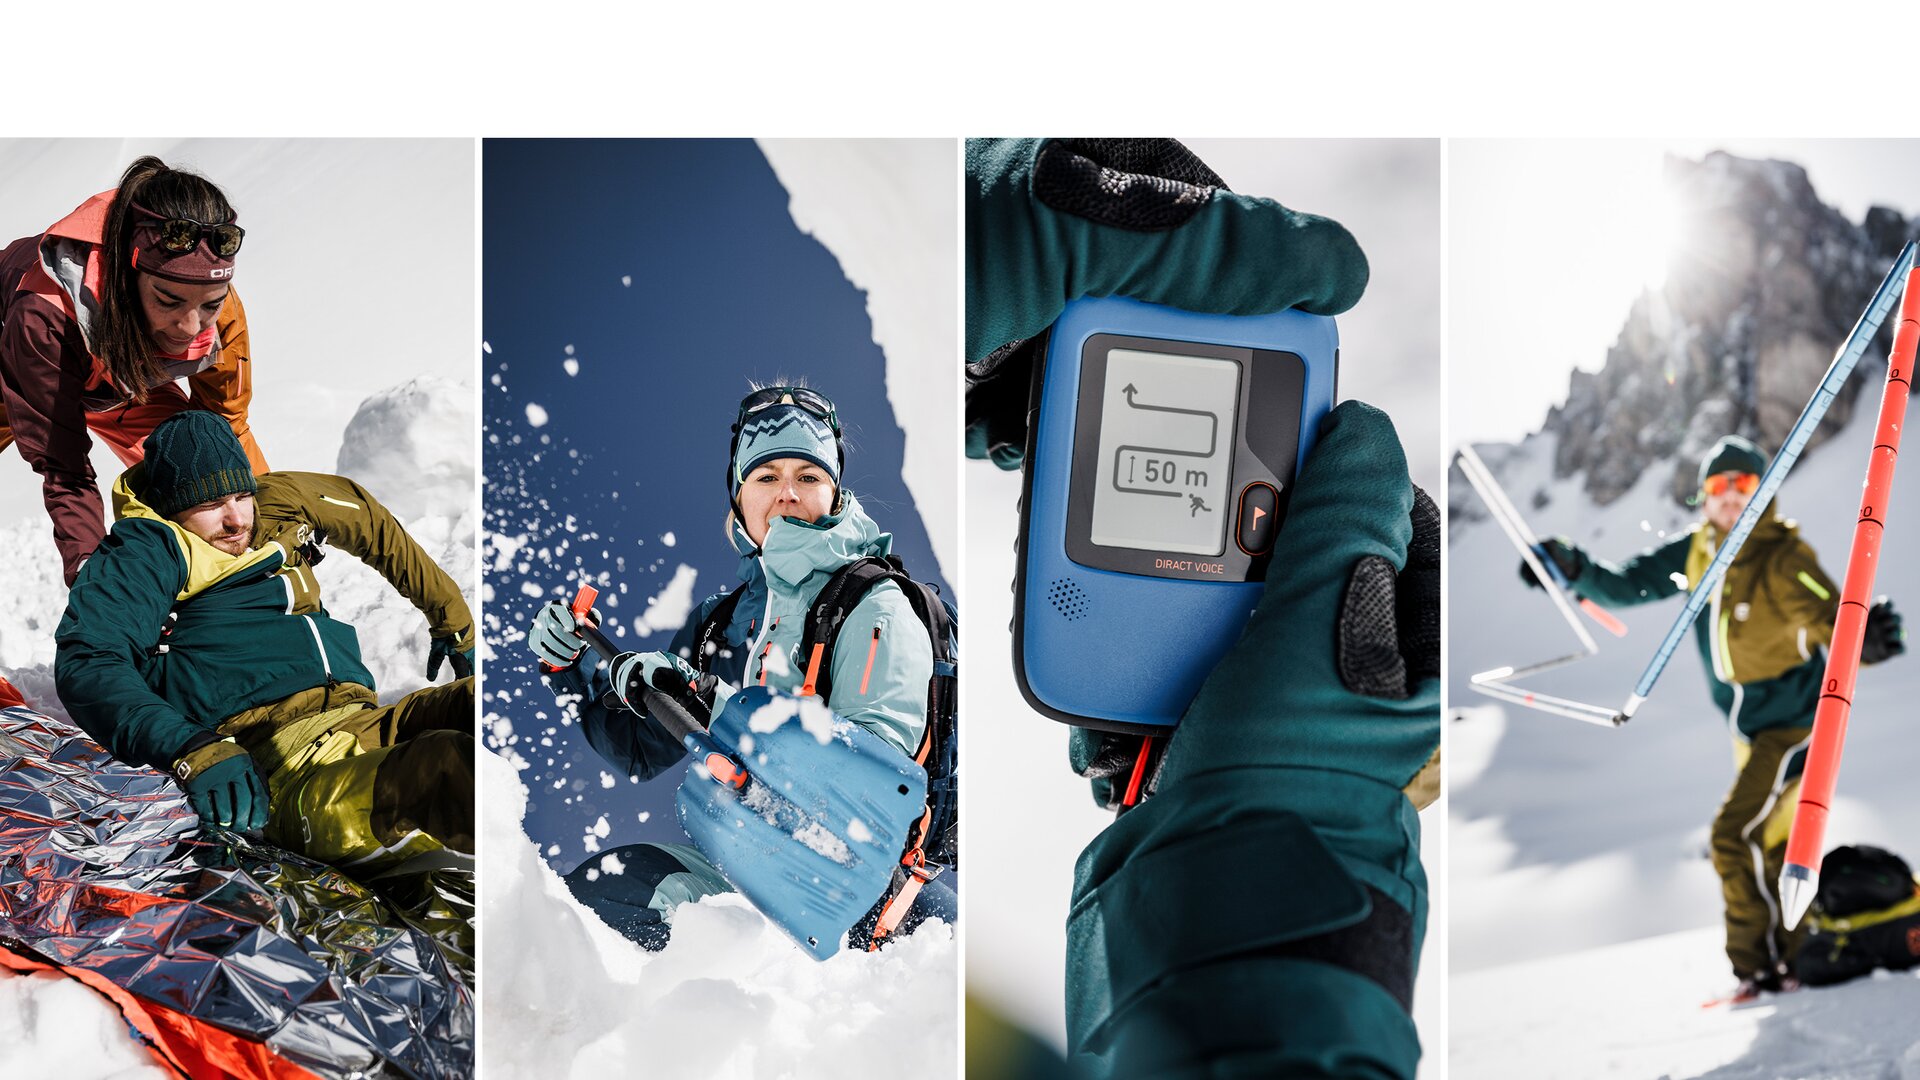 Ortovox Rescue Set Diract Voice  Buy Ortovox Ski Equipment Online  Sportmania Switzerland - Sportmania